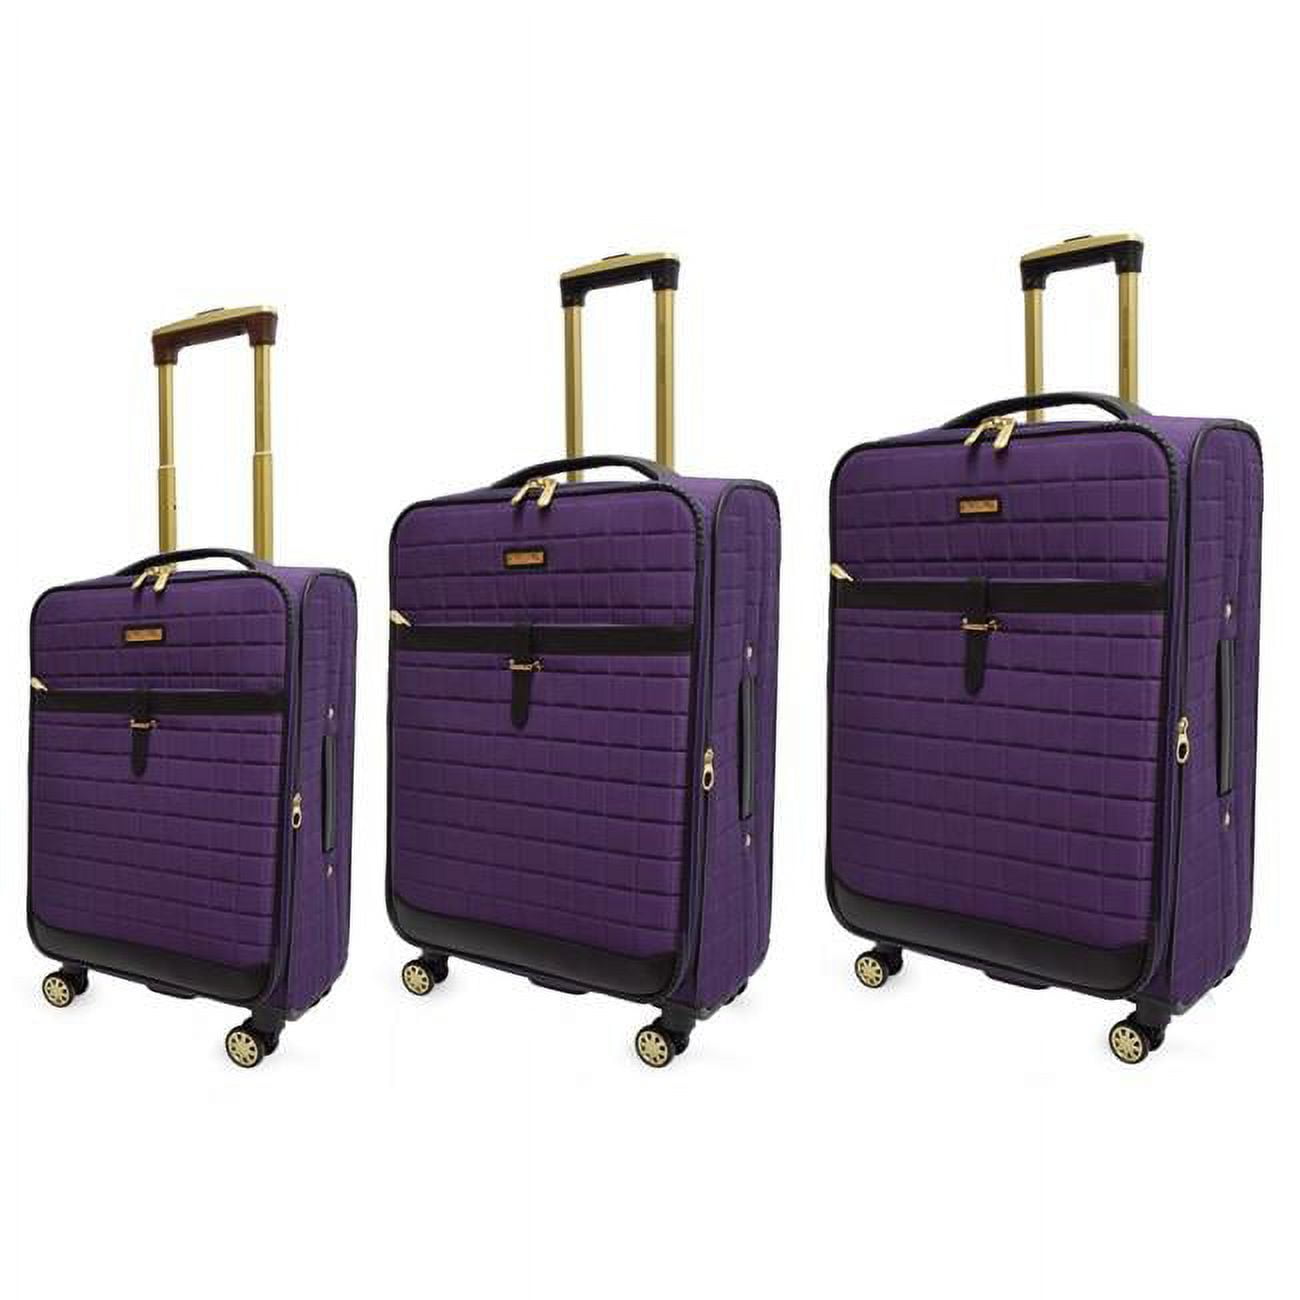 Adrienne Vittadini® Rose Gold Floral Luggage Set